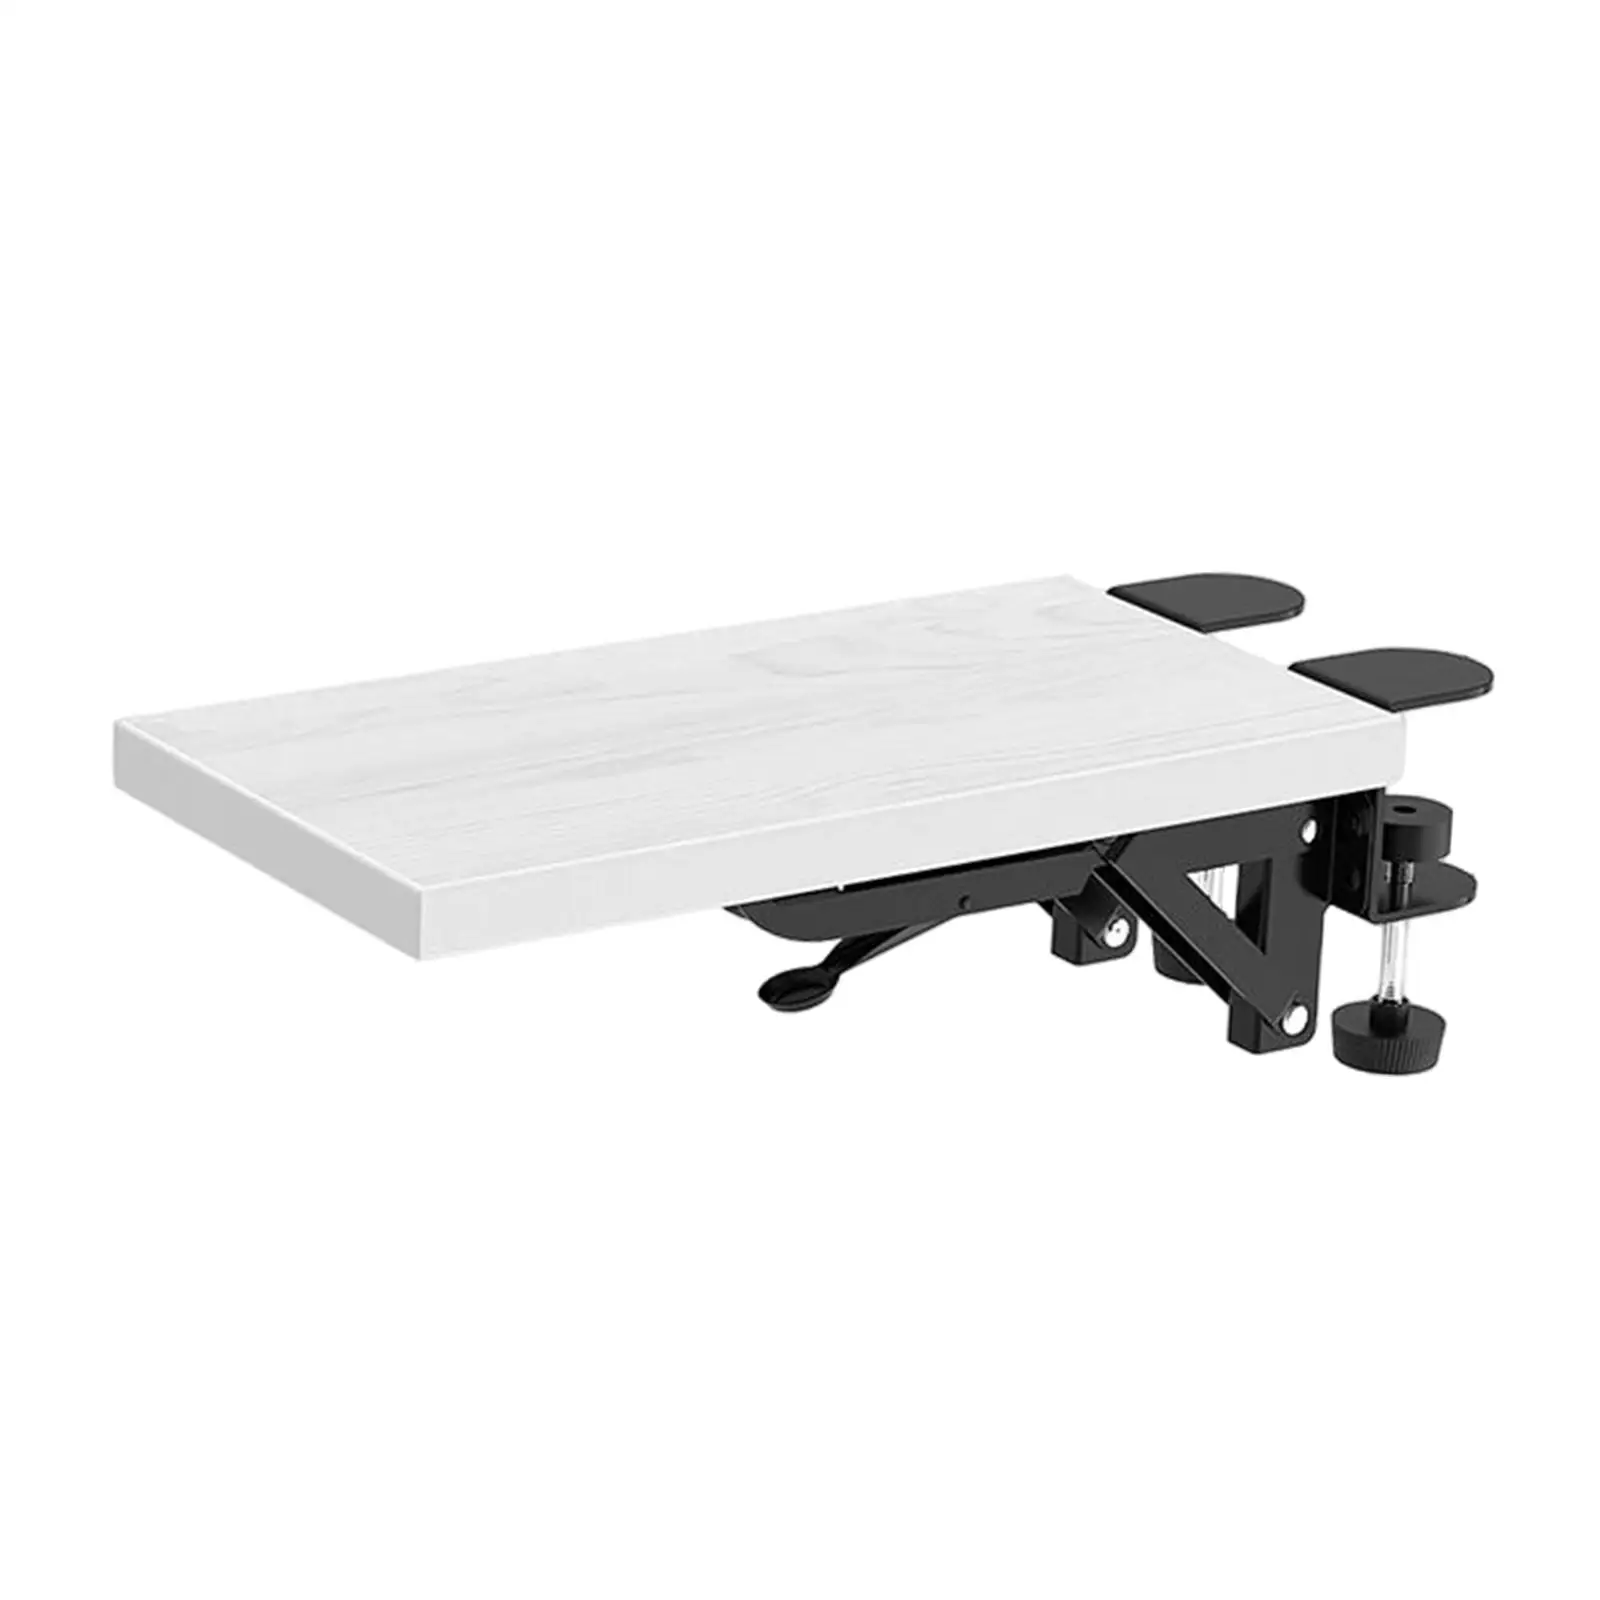 Wood Computer Arm Bracket Wrist Rest Convenient Folding Ergonomic Comfortable Extension Board for Office Home Chair Table Desk